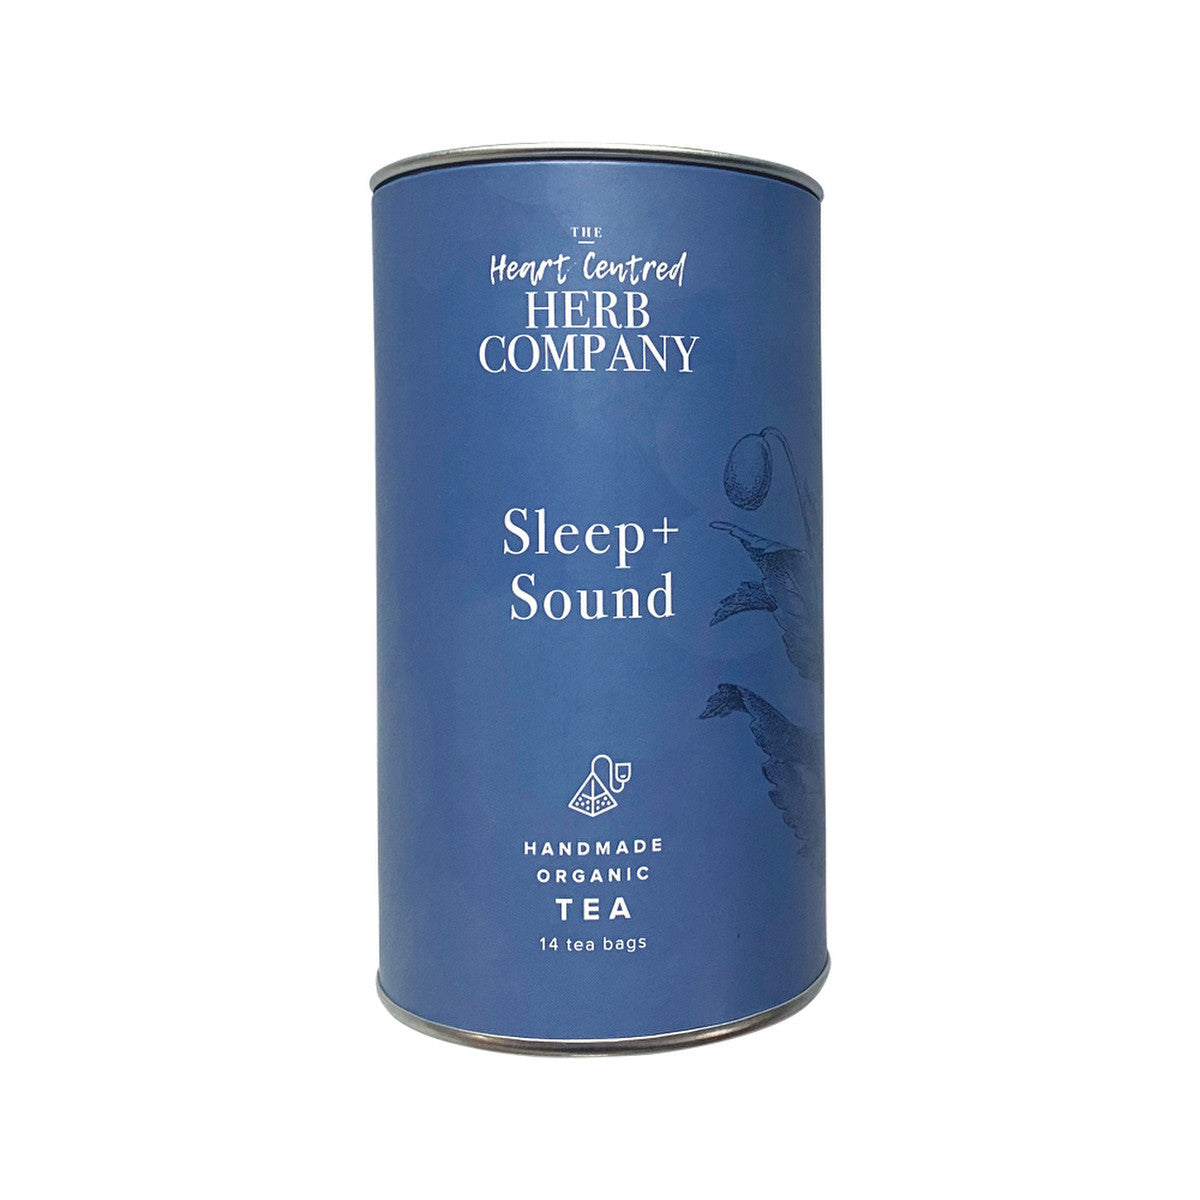 The Heart Centred Herb Company Sleep + Sound, 14 Tea Bags Handmade Tea